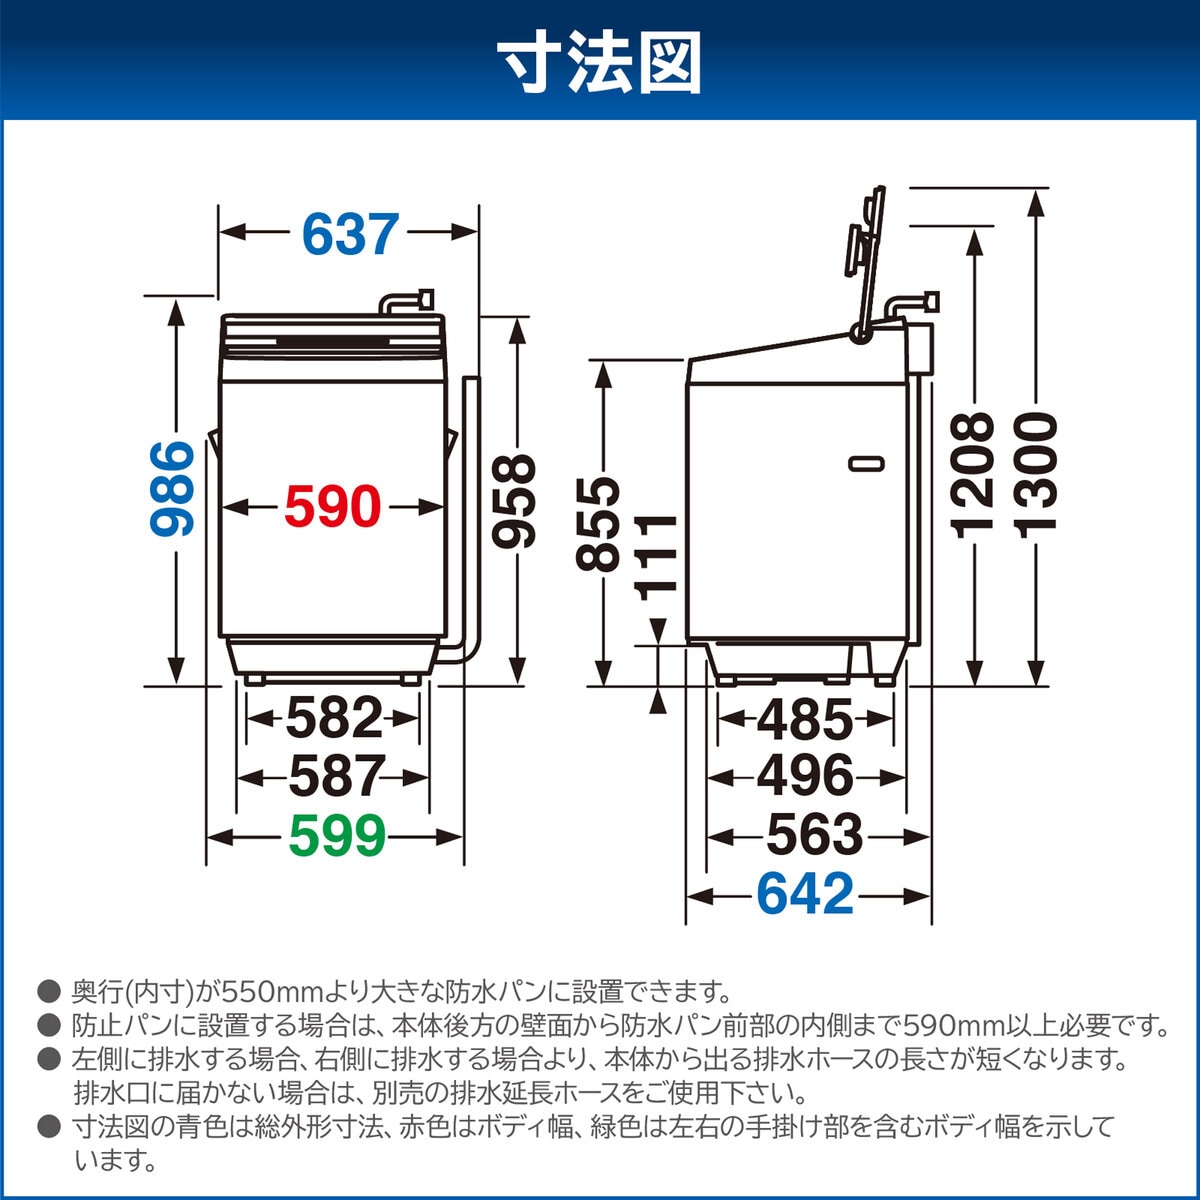 TOSHIBA 縦型洗濯機 ZABOON 10kg AW-10DP2